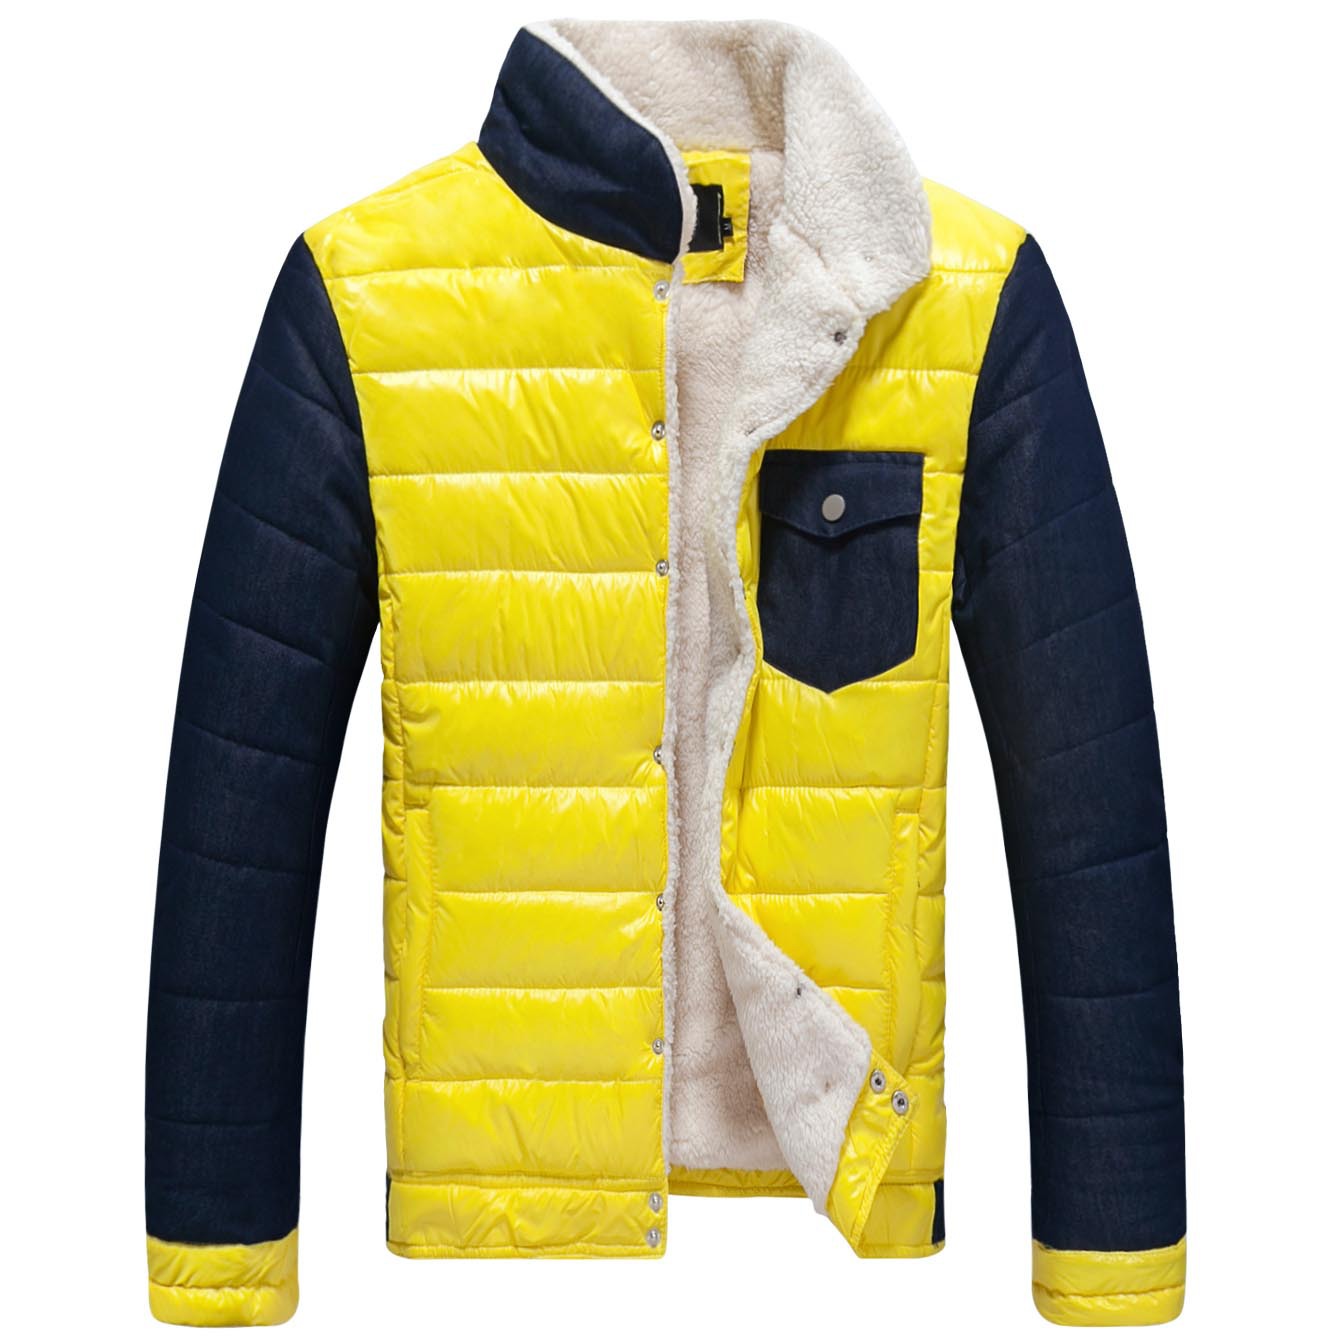 Men s winter clothes new collar color coat jacket youth SC coat large spot